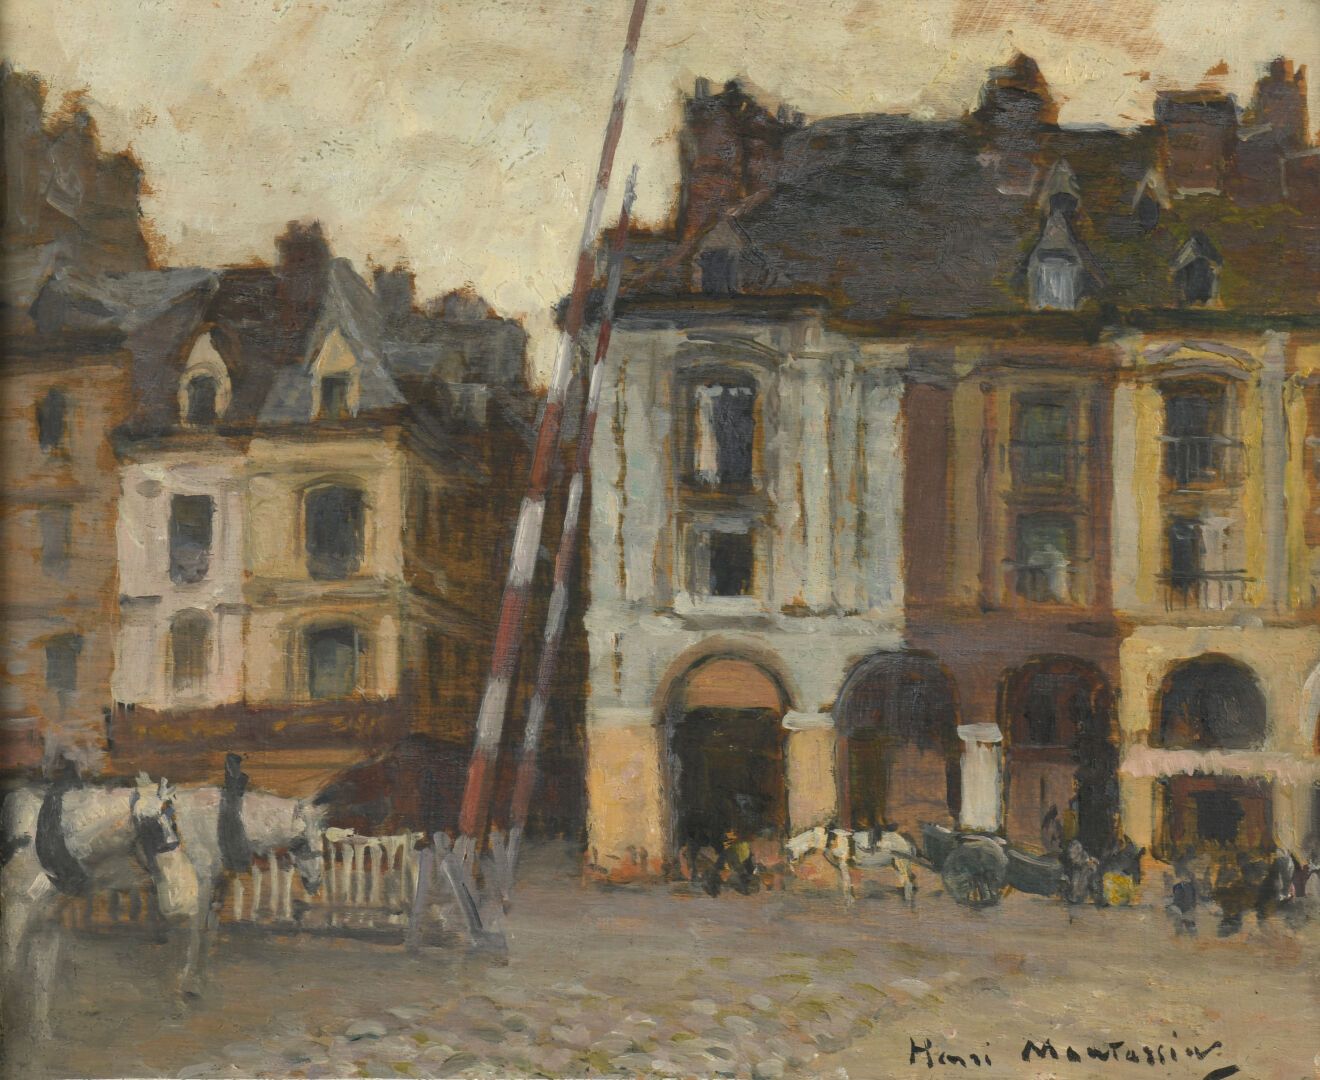 Null 亨利-蒙塔西埃(1880-1946)
迪耶普，平交道口
面板油画，右下角有签名。
21,5 x 26,5厘米